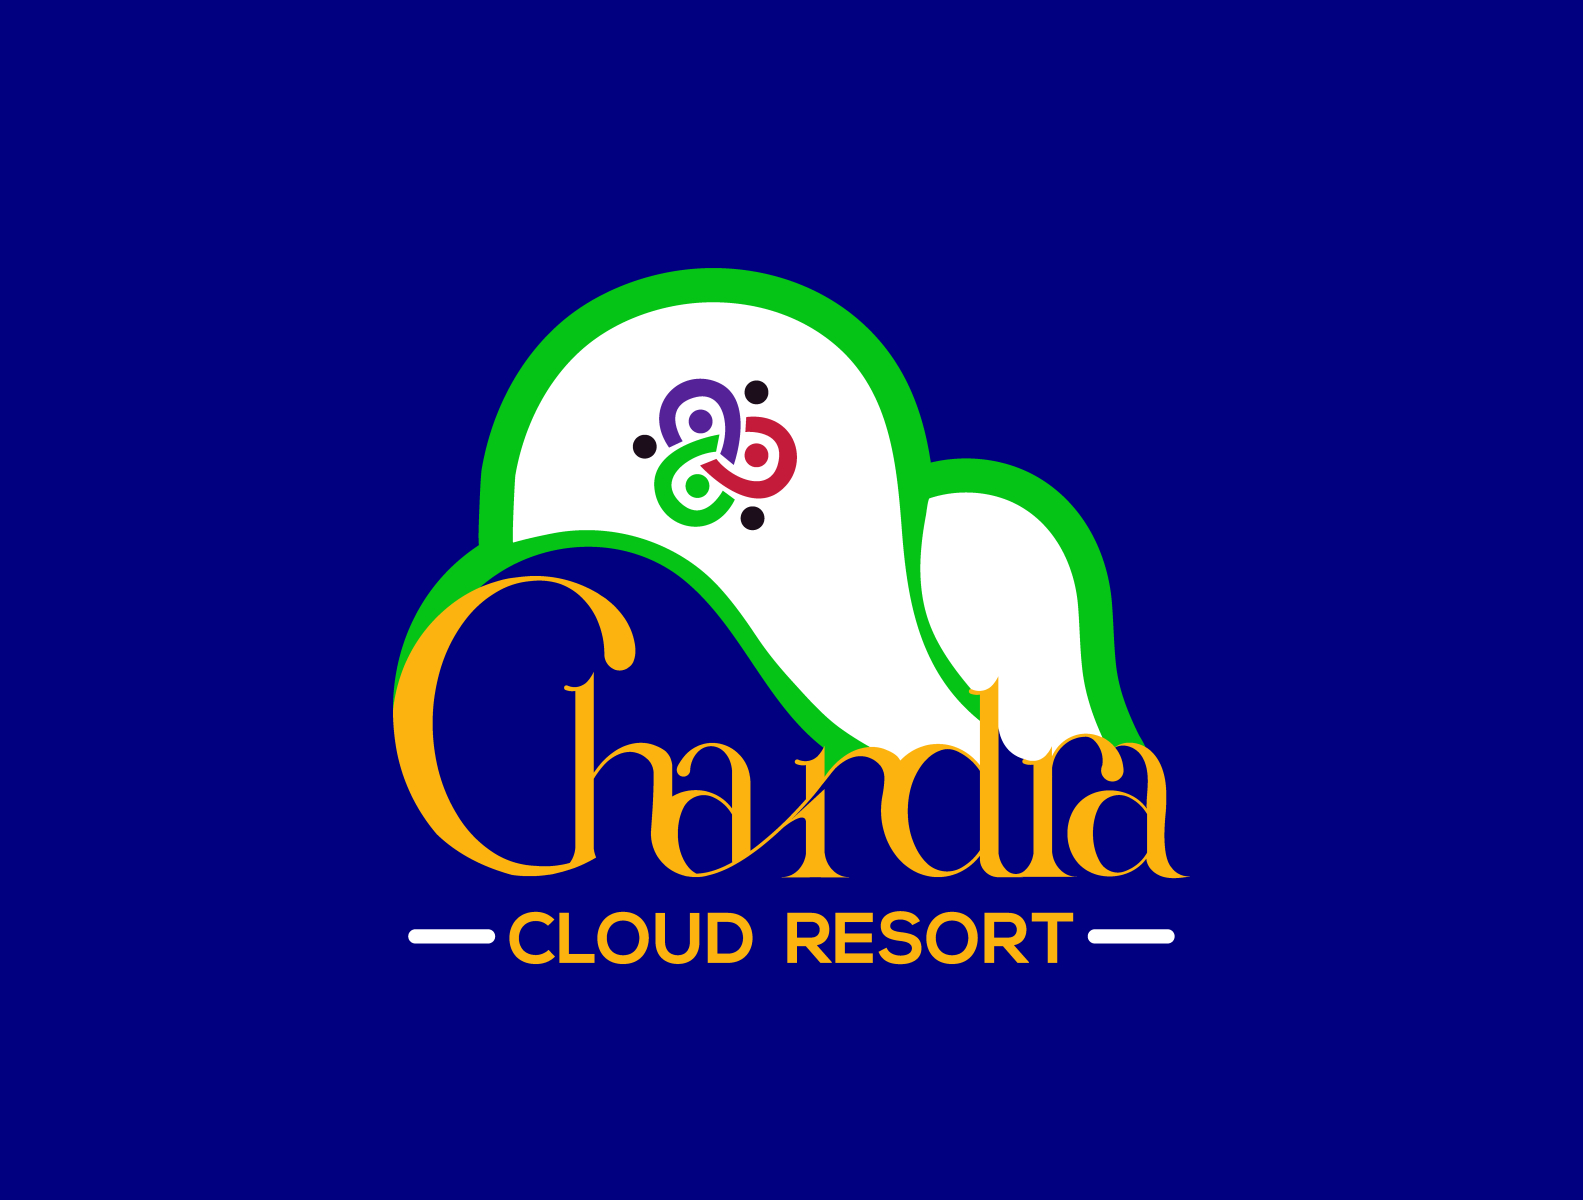 Chandra Asri Petrochemical logo in transparent PNG format